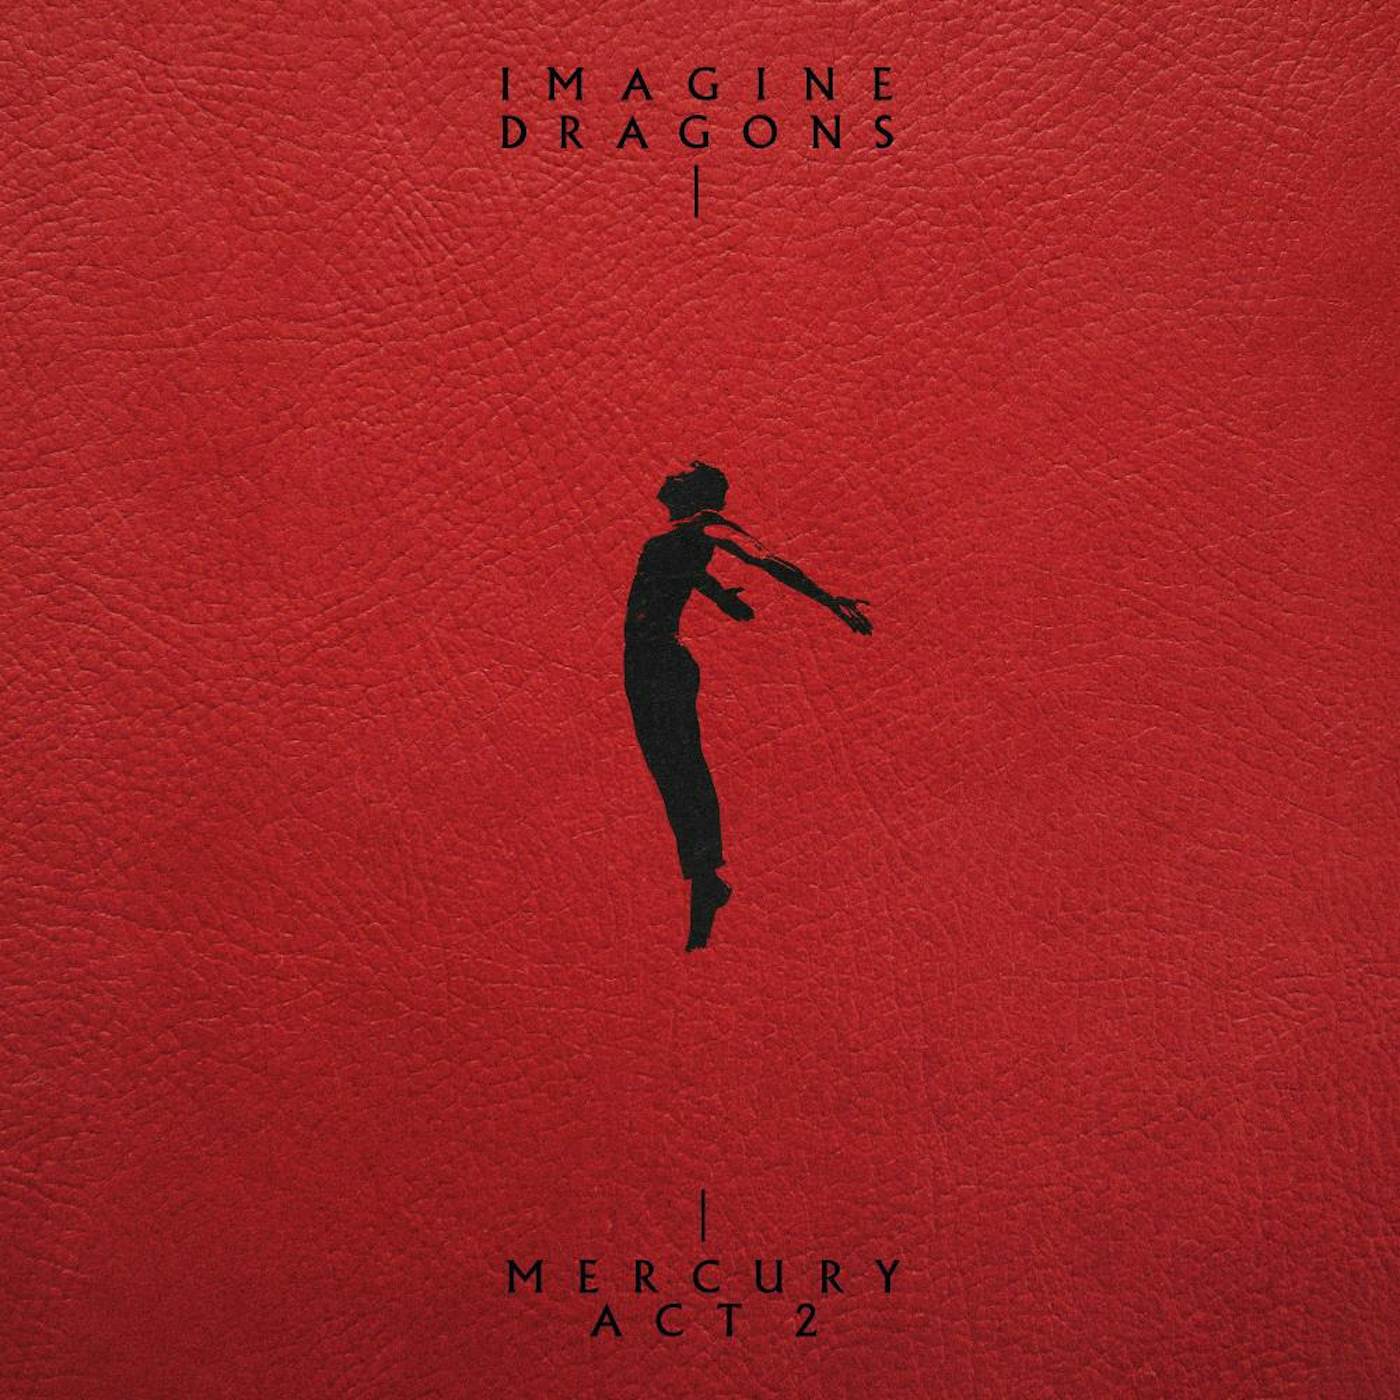 Imagine Dragons Mercury - Act 2 Vinyl Record